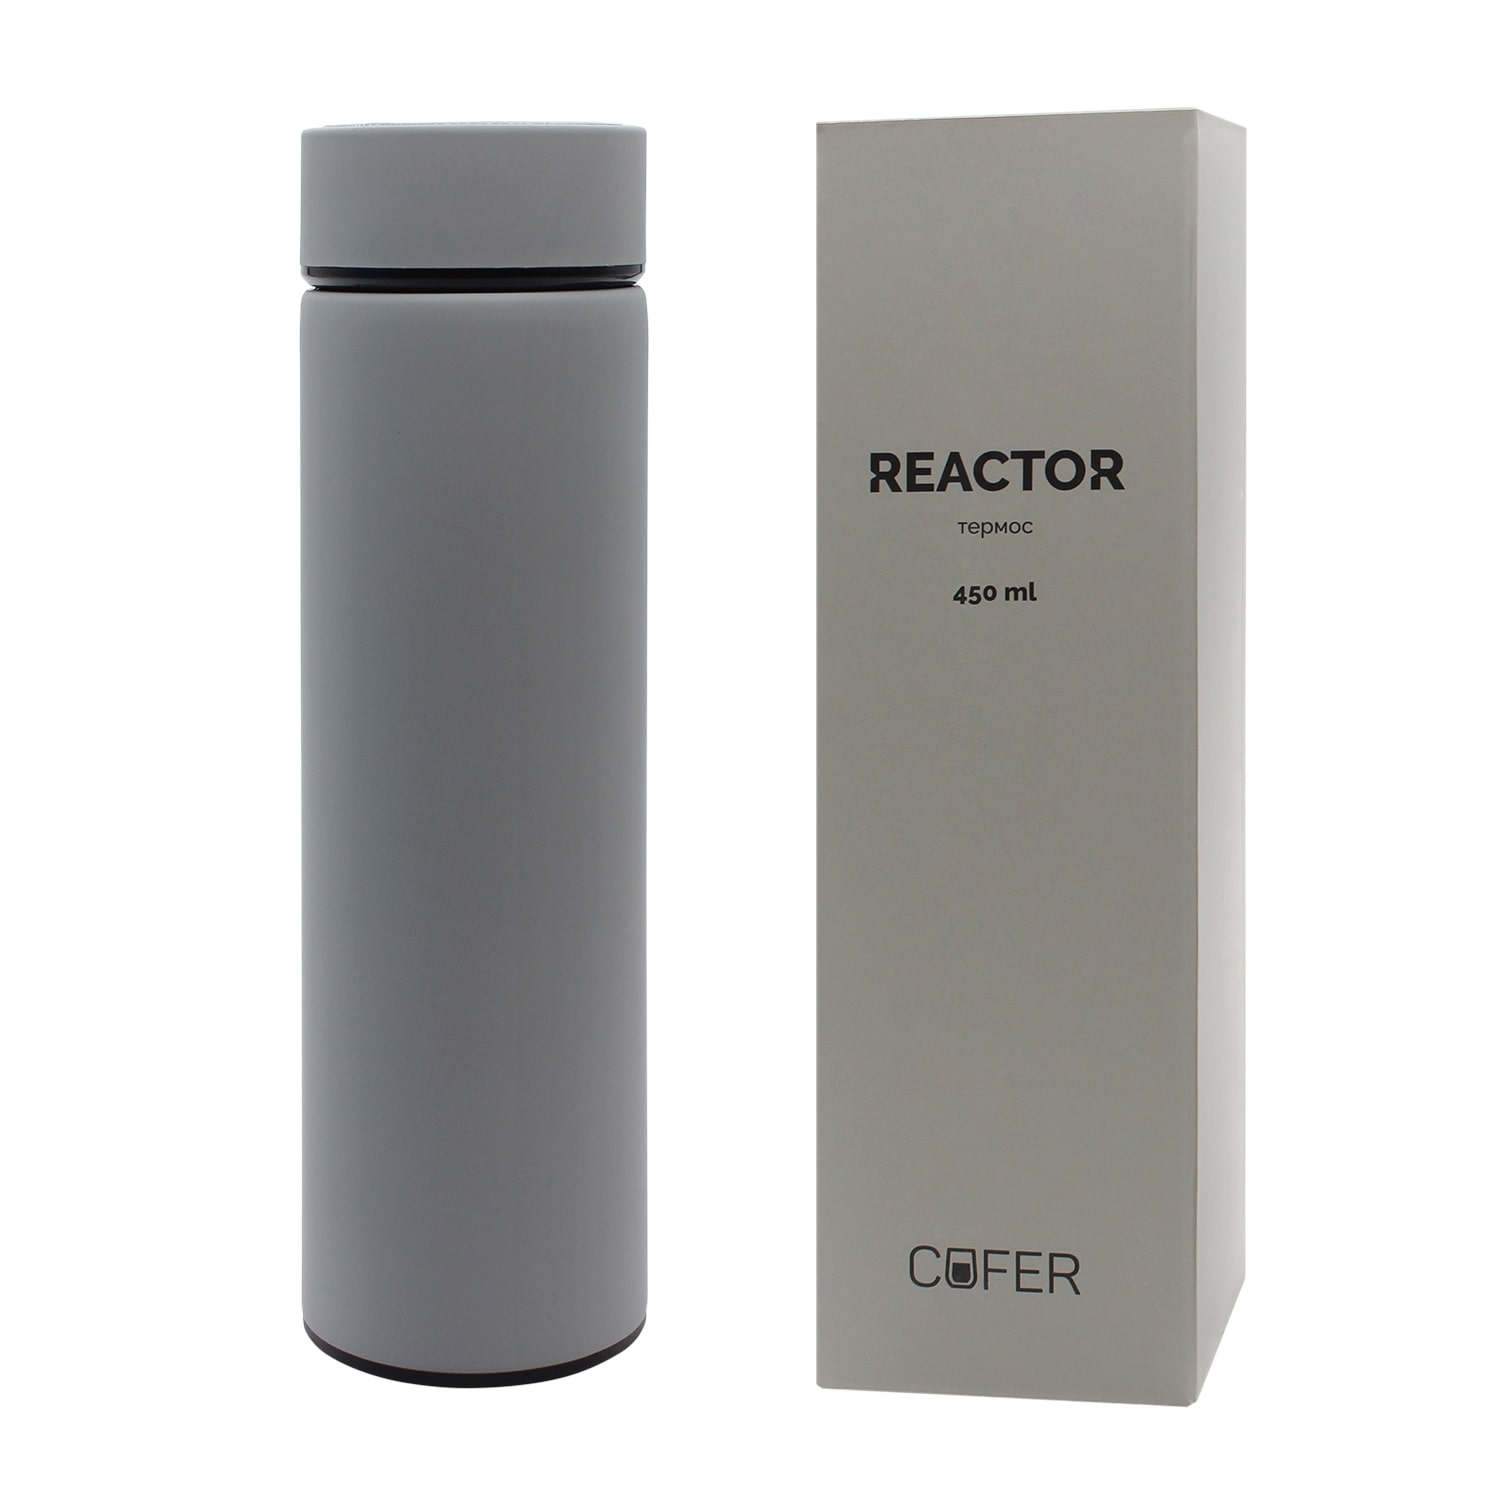 Термос Reactor софт-тач с датчиком температуры (серый), серый, металл, soft touch